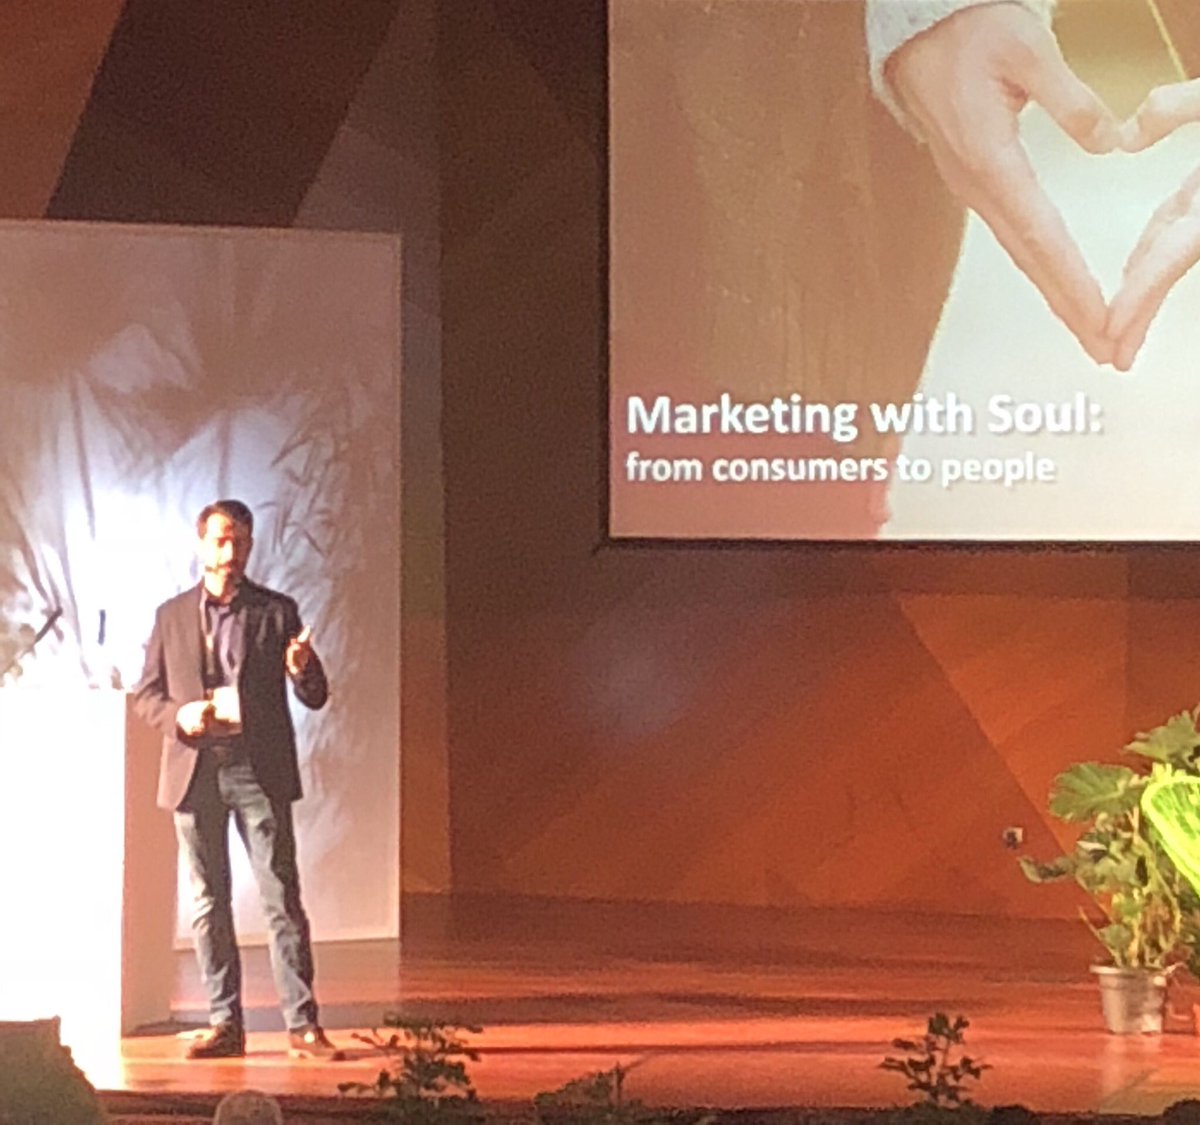 .@alfonsoferAF @SamsungEspana speaks about “Marketing with soul” #TechnologyWithPurpose #SBMadrid18 @SomosQuiero